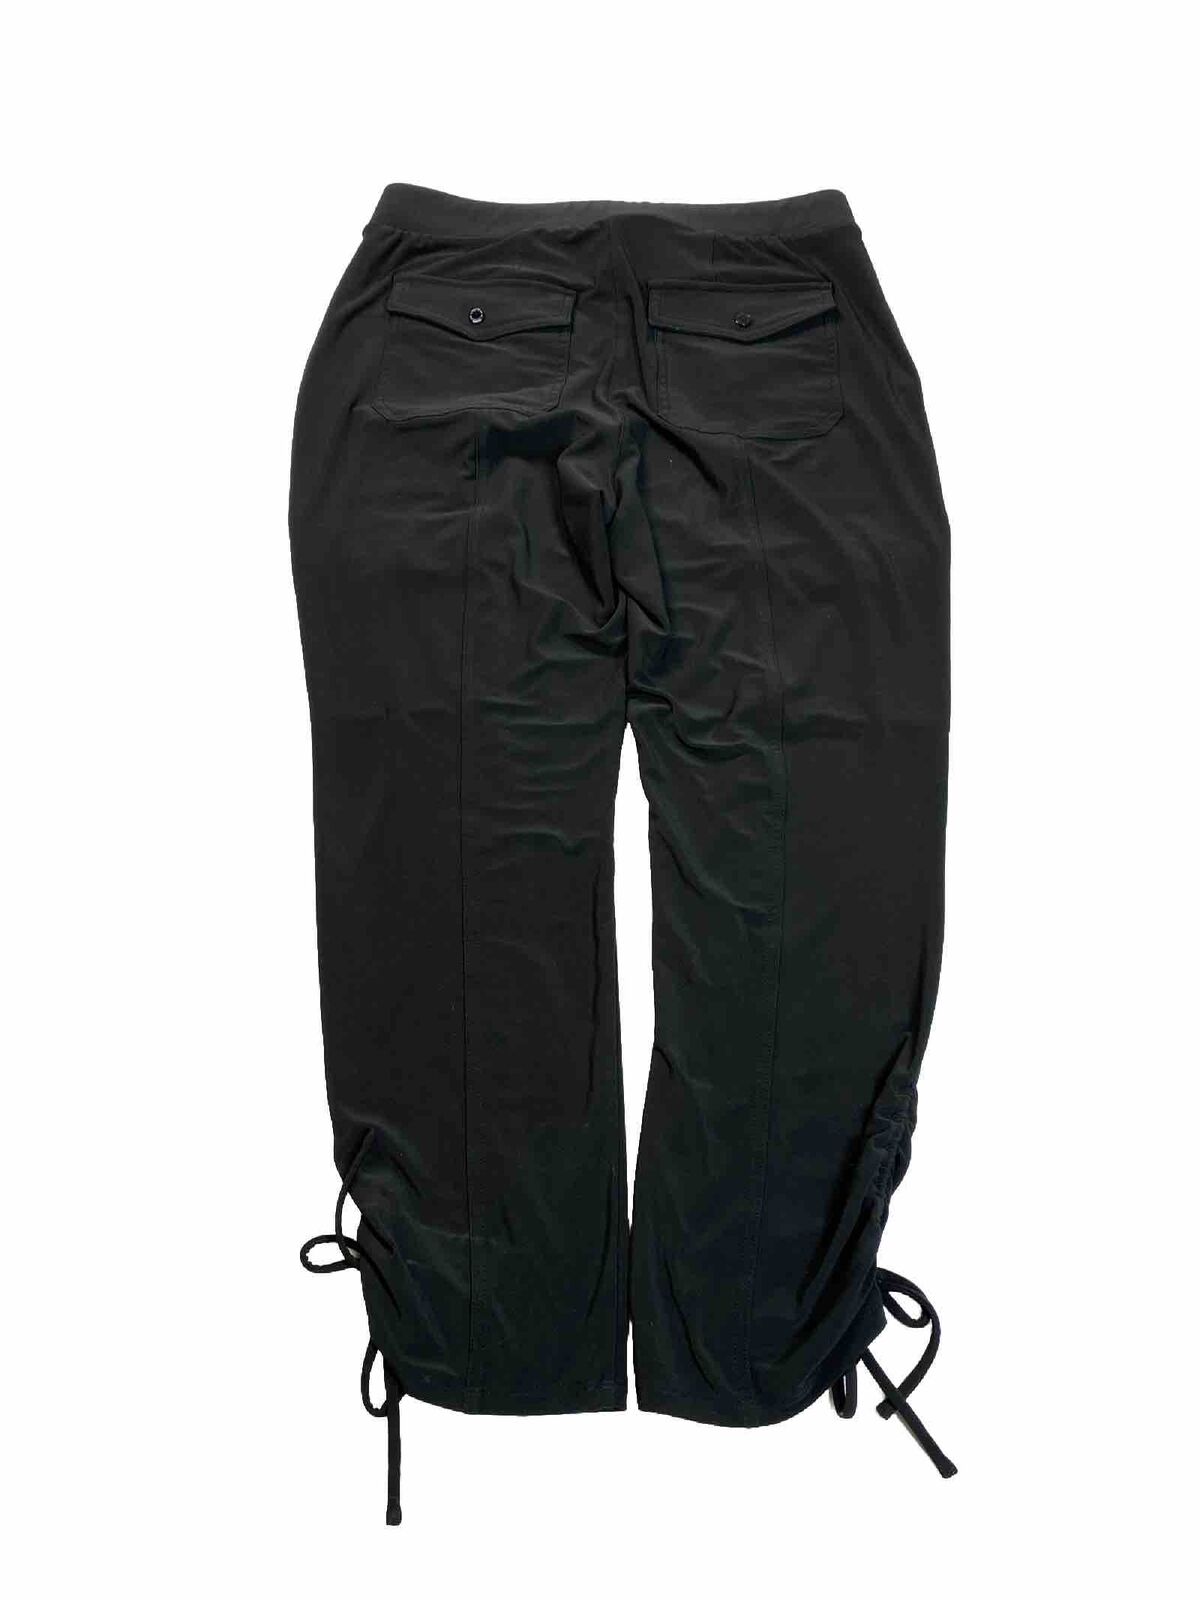 White House Black Market Women's Black Straight Crop Cargo Pants - S